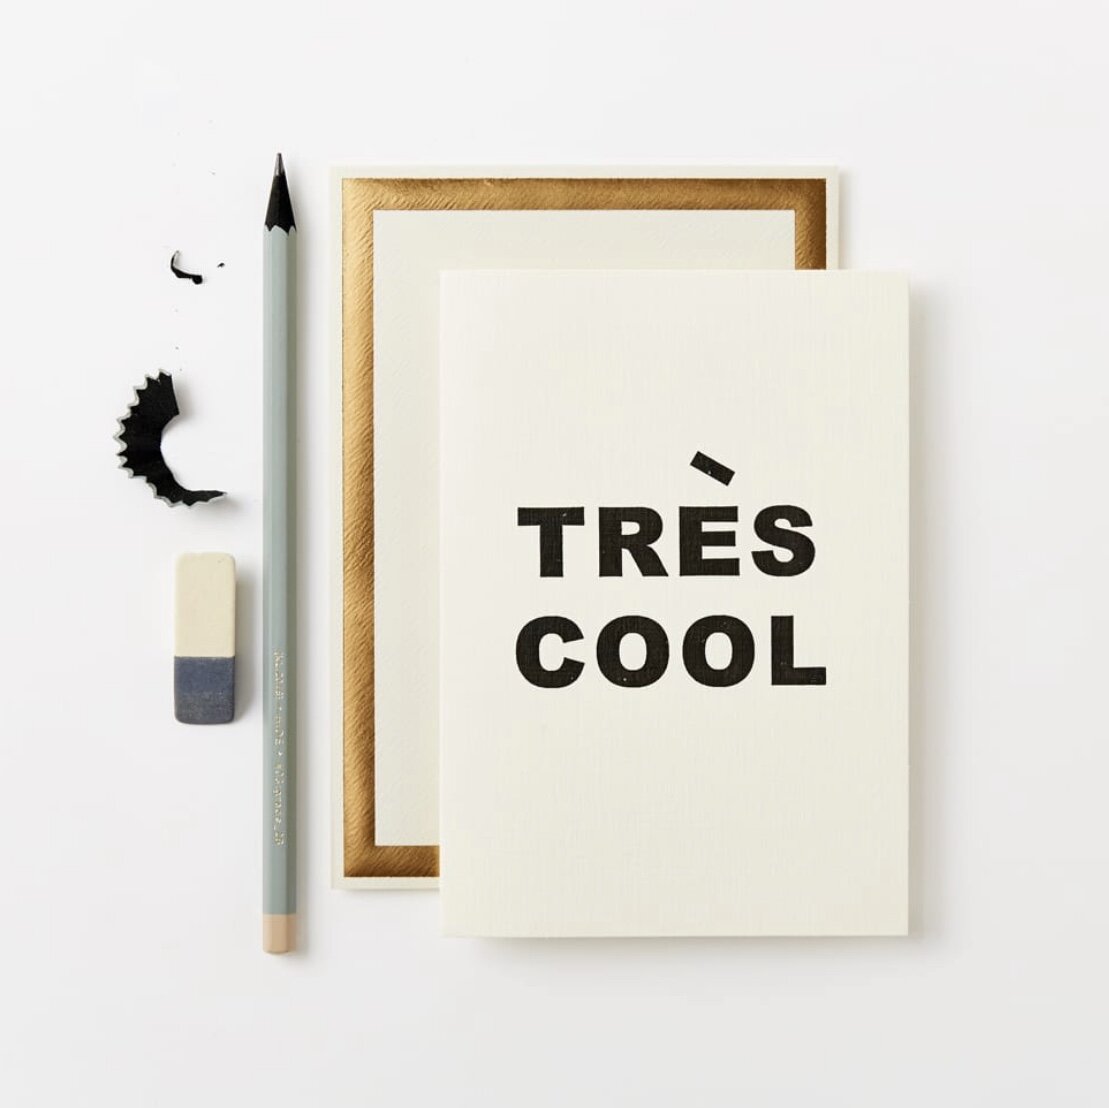 TRÈS COOL | CARD BY KATIE LEAMON